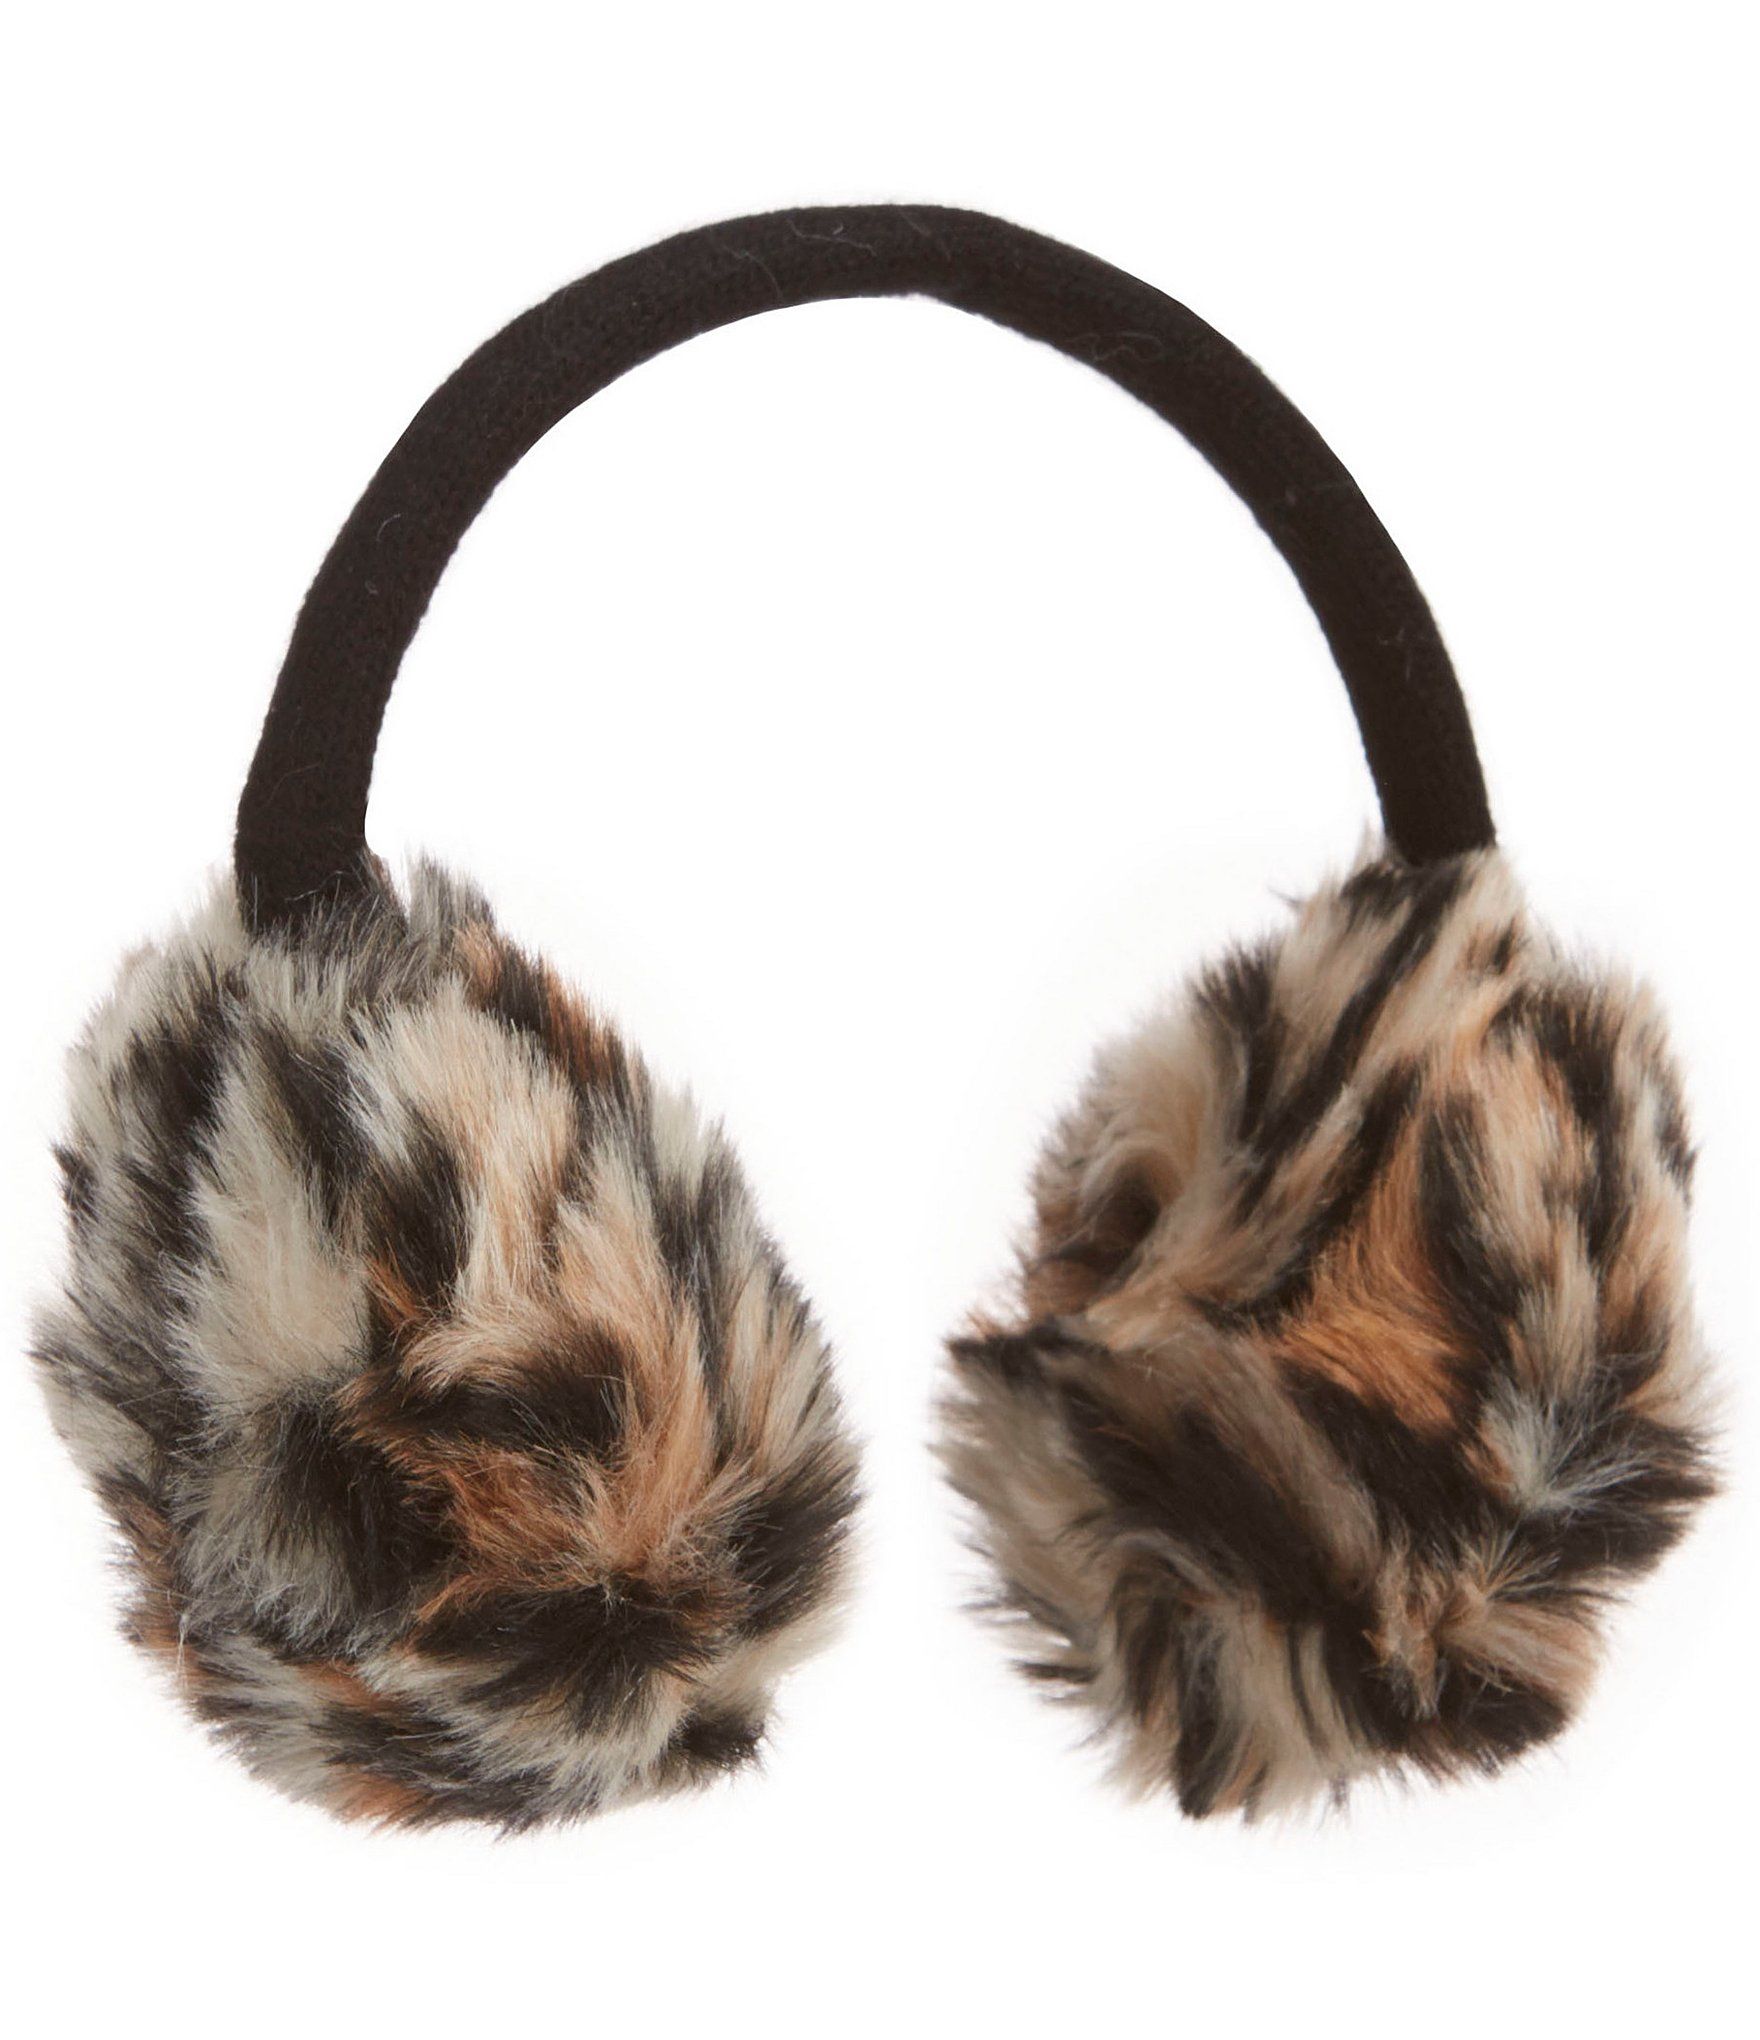 Copper Key Leopard Faux-Fur Ear Muffs | Dillards Inc.